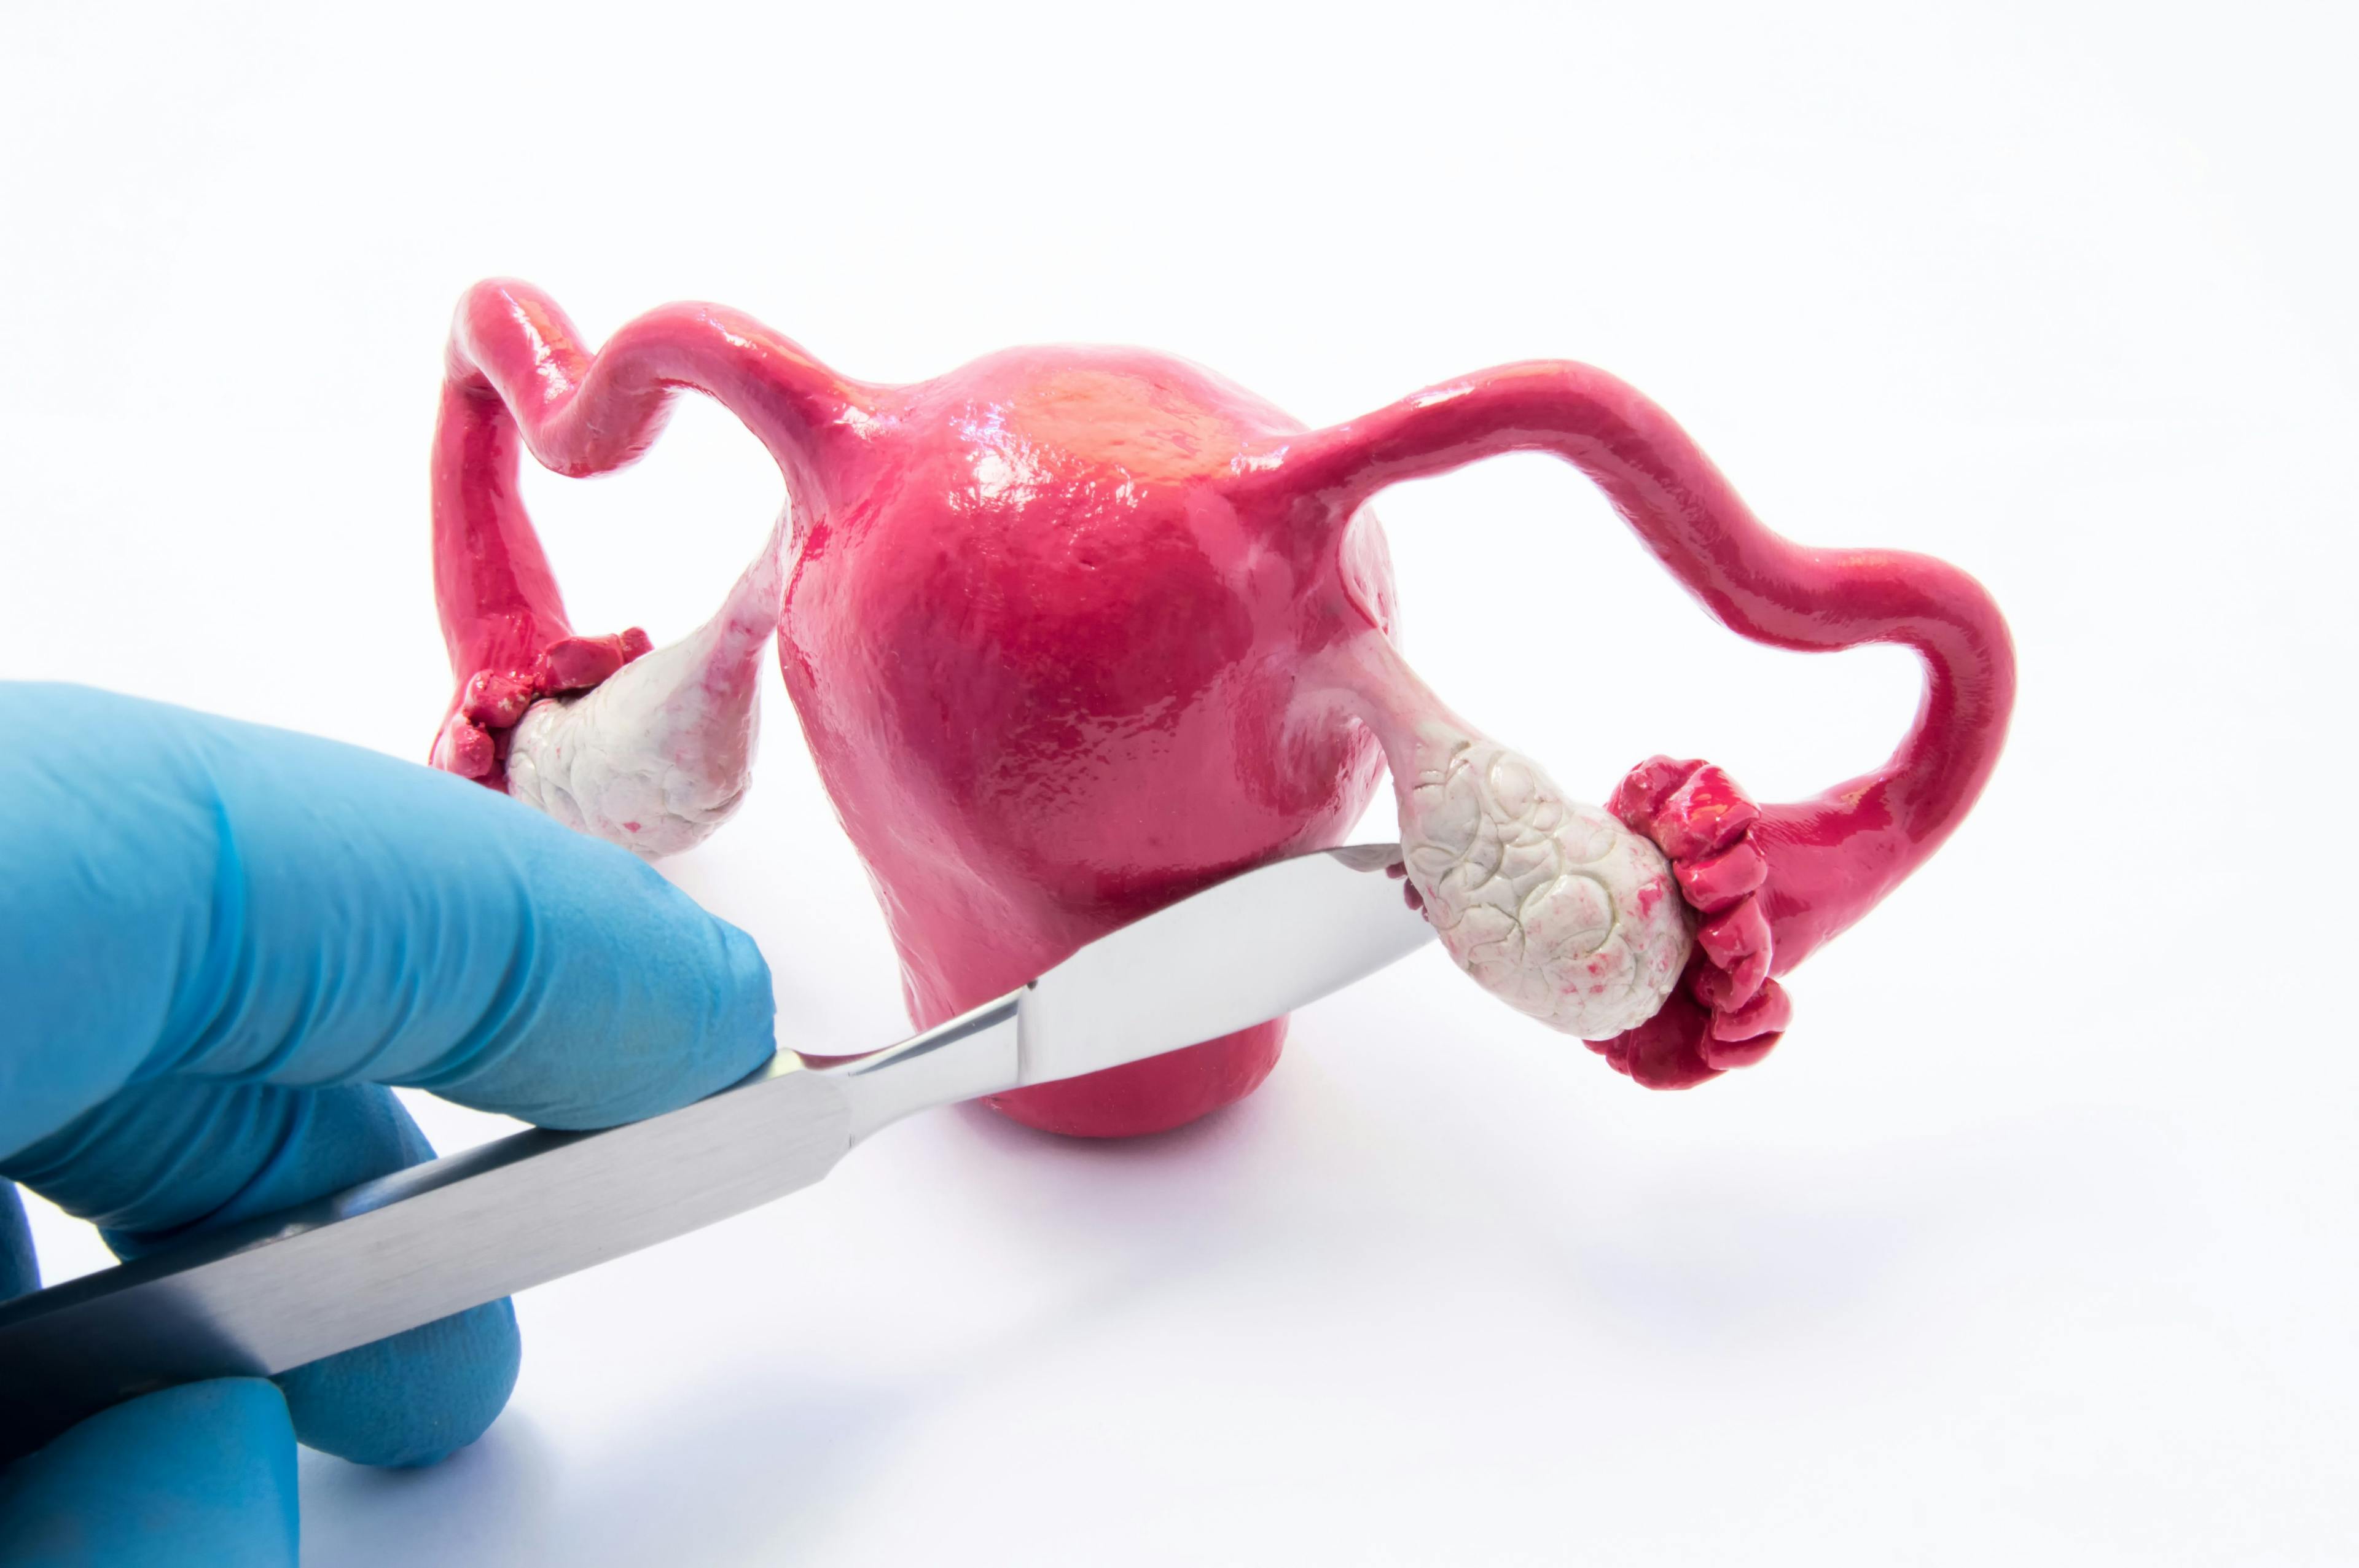 Surgeon holding scalpel near ovary | Image Credit: shidlovski – stock.adobe.com